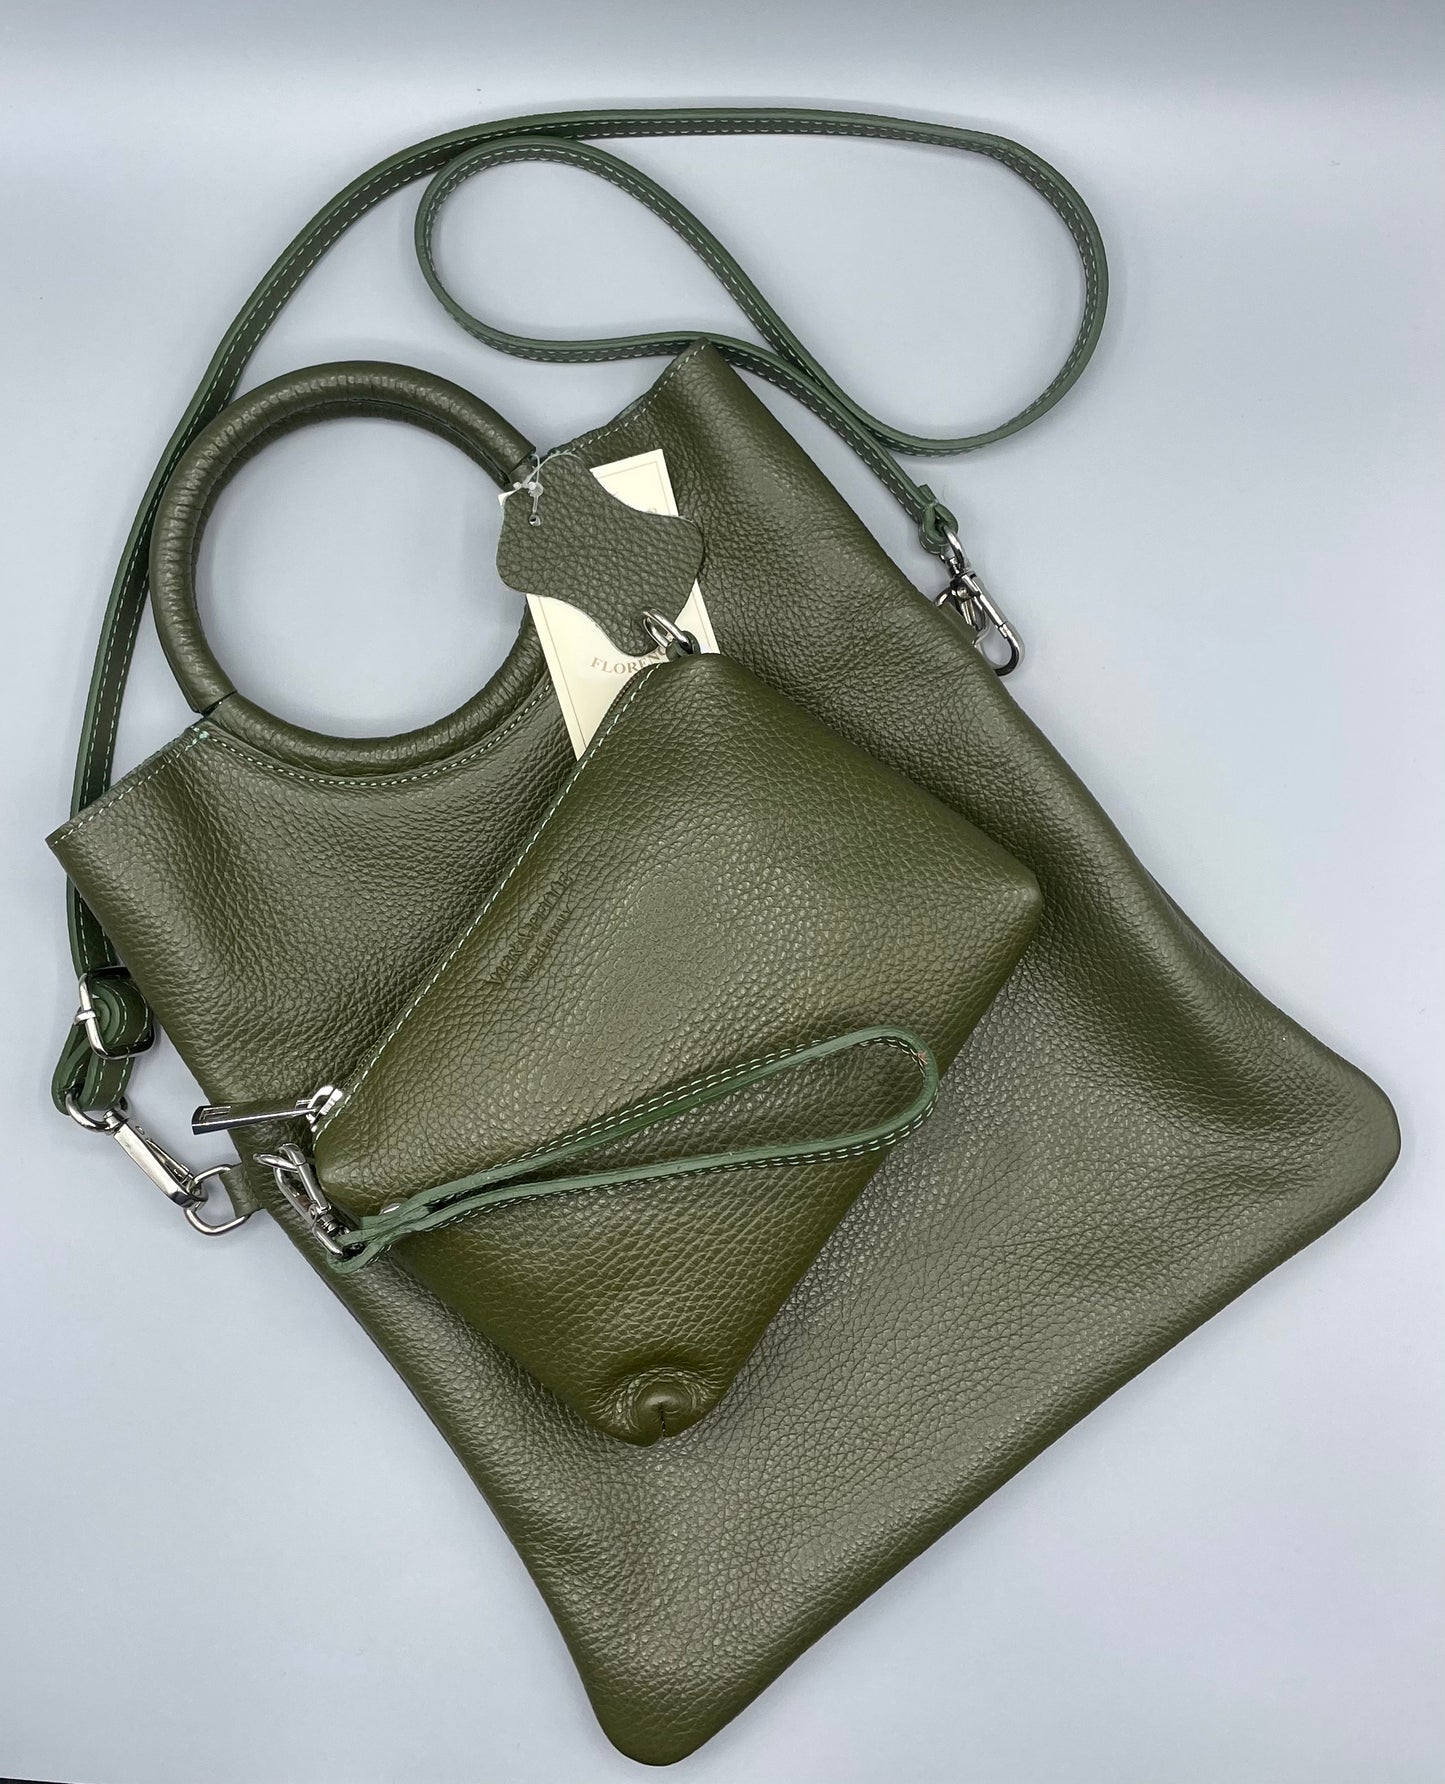 Handtasche "Florence" aus echtem Leder